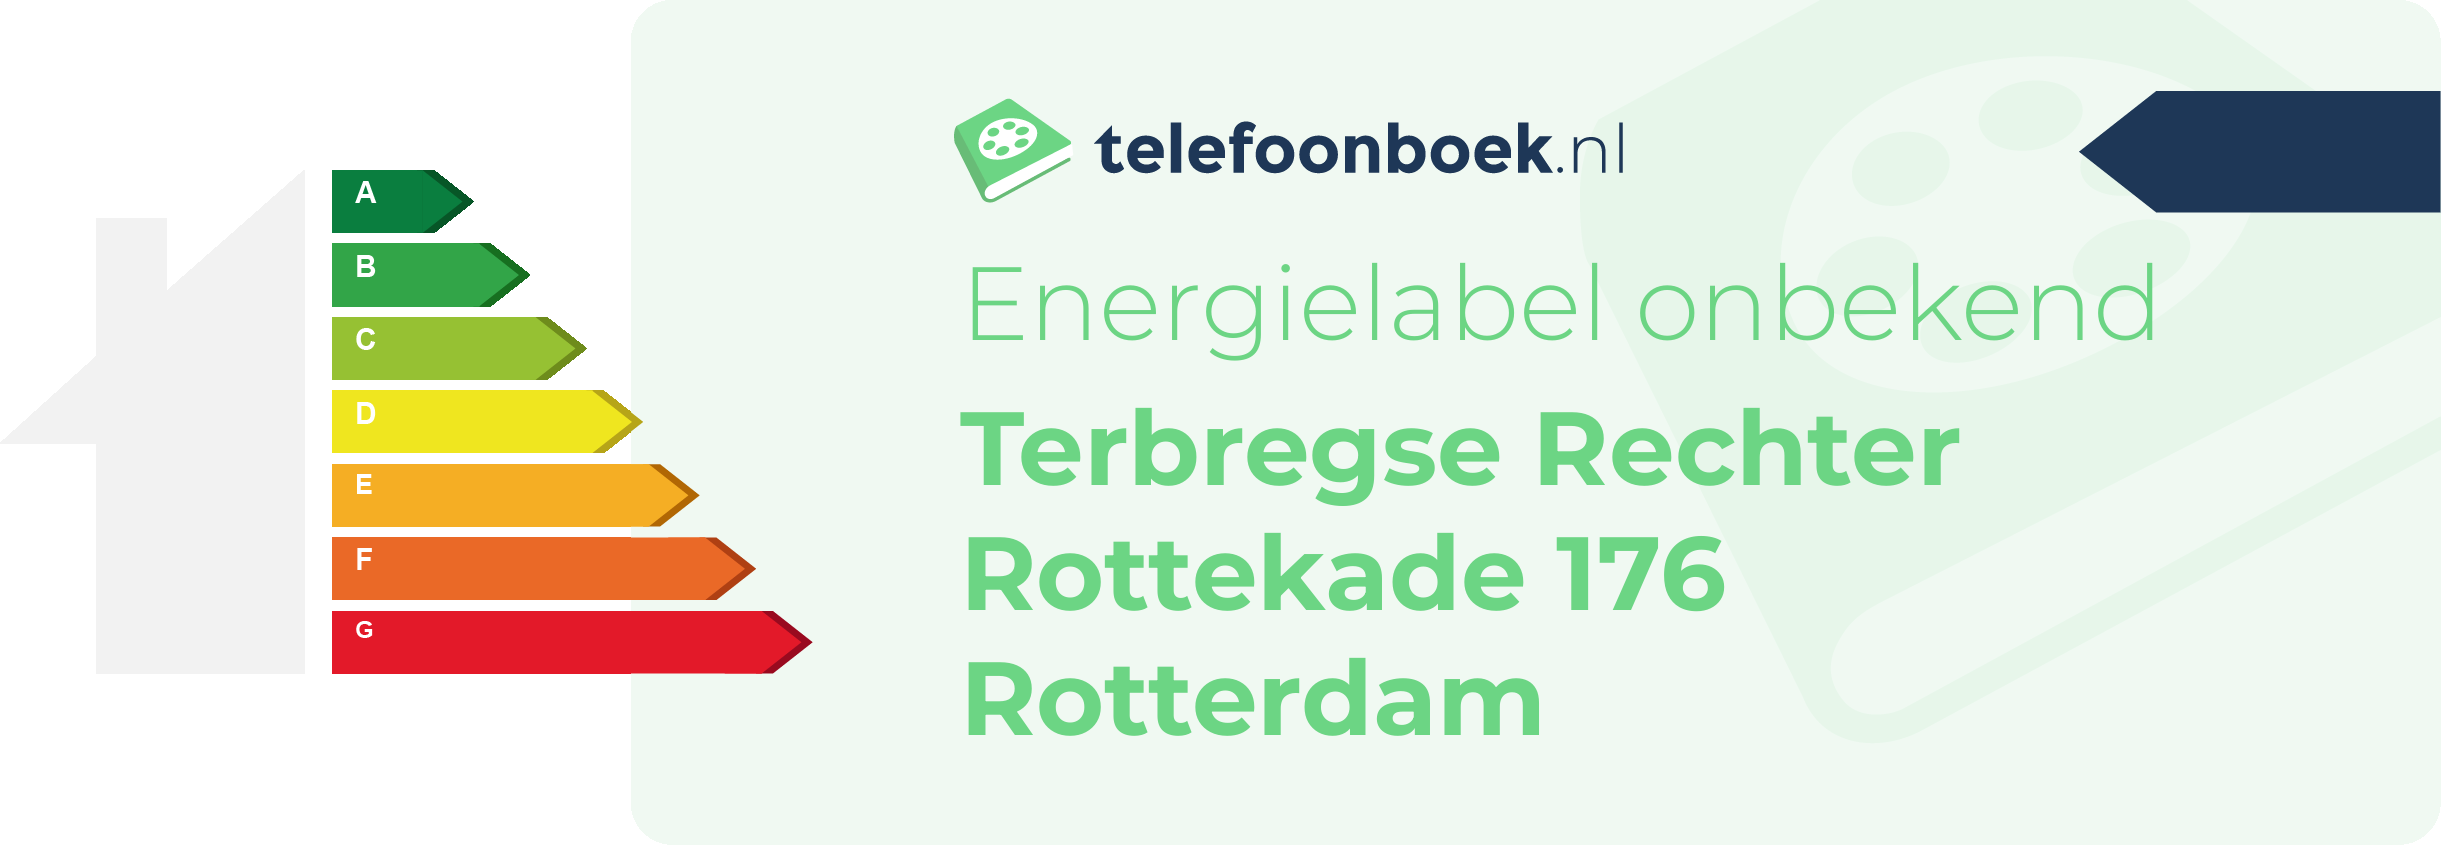 Energielabel Terbregse Rechter Rottekade 176 Rotterdam